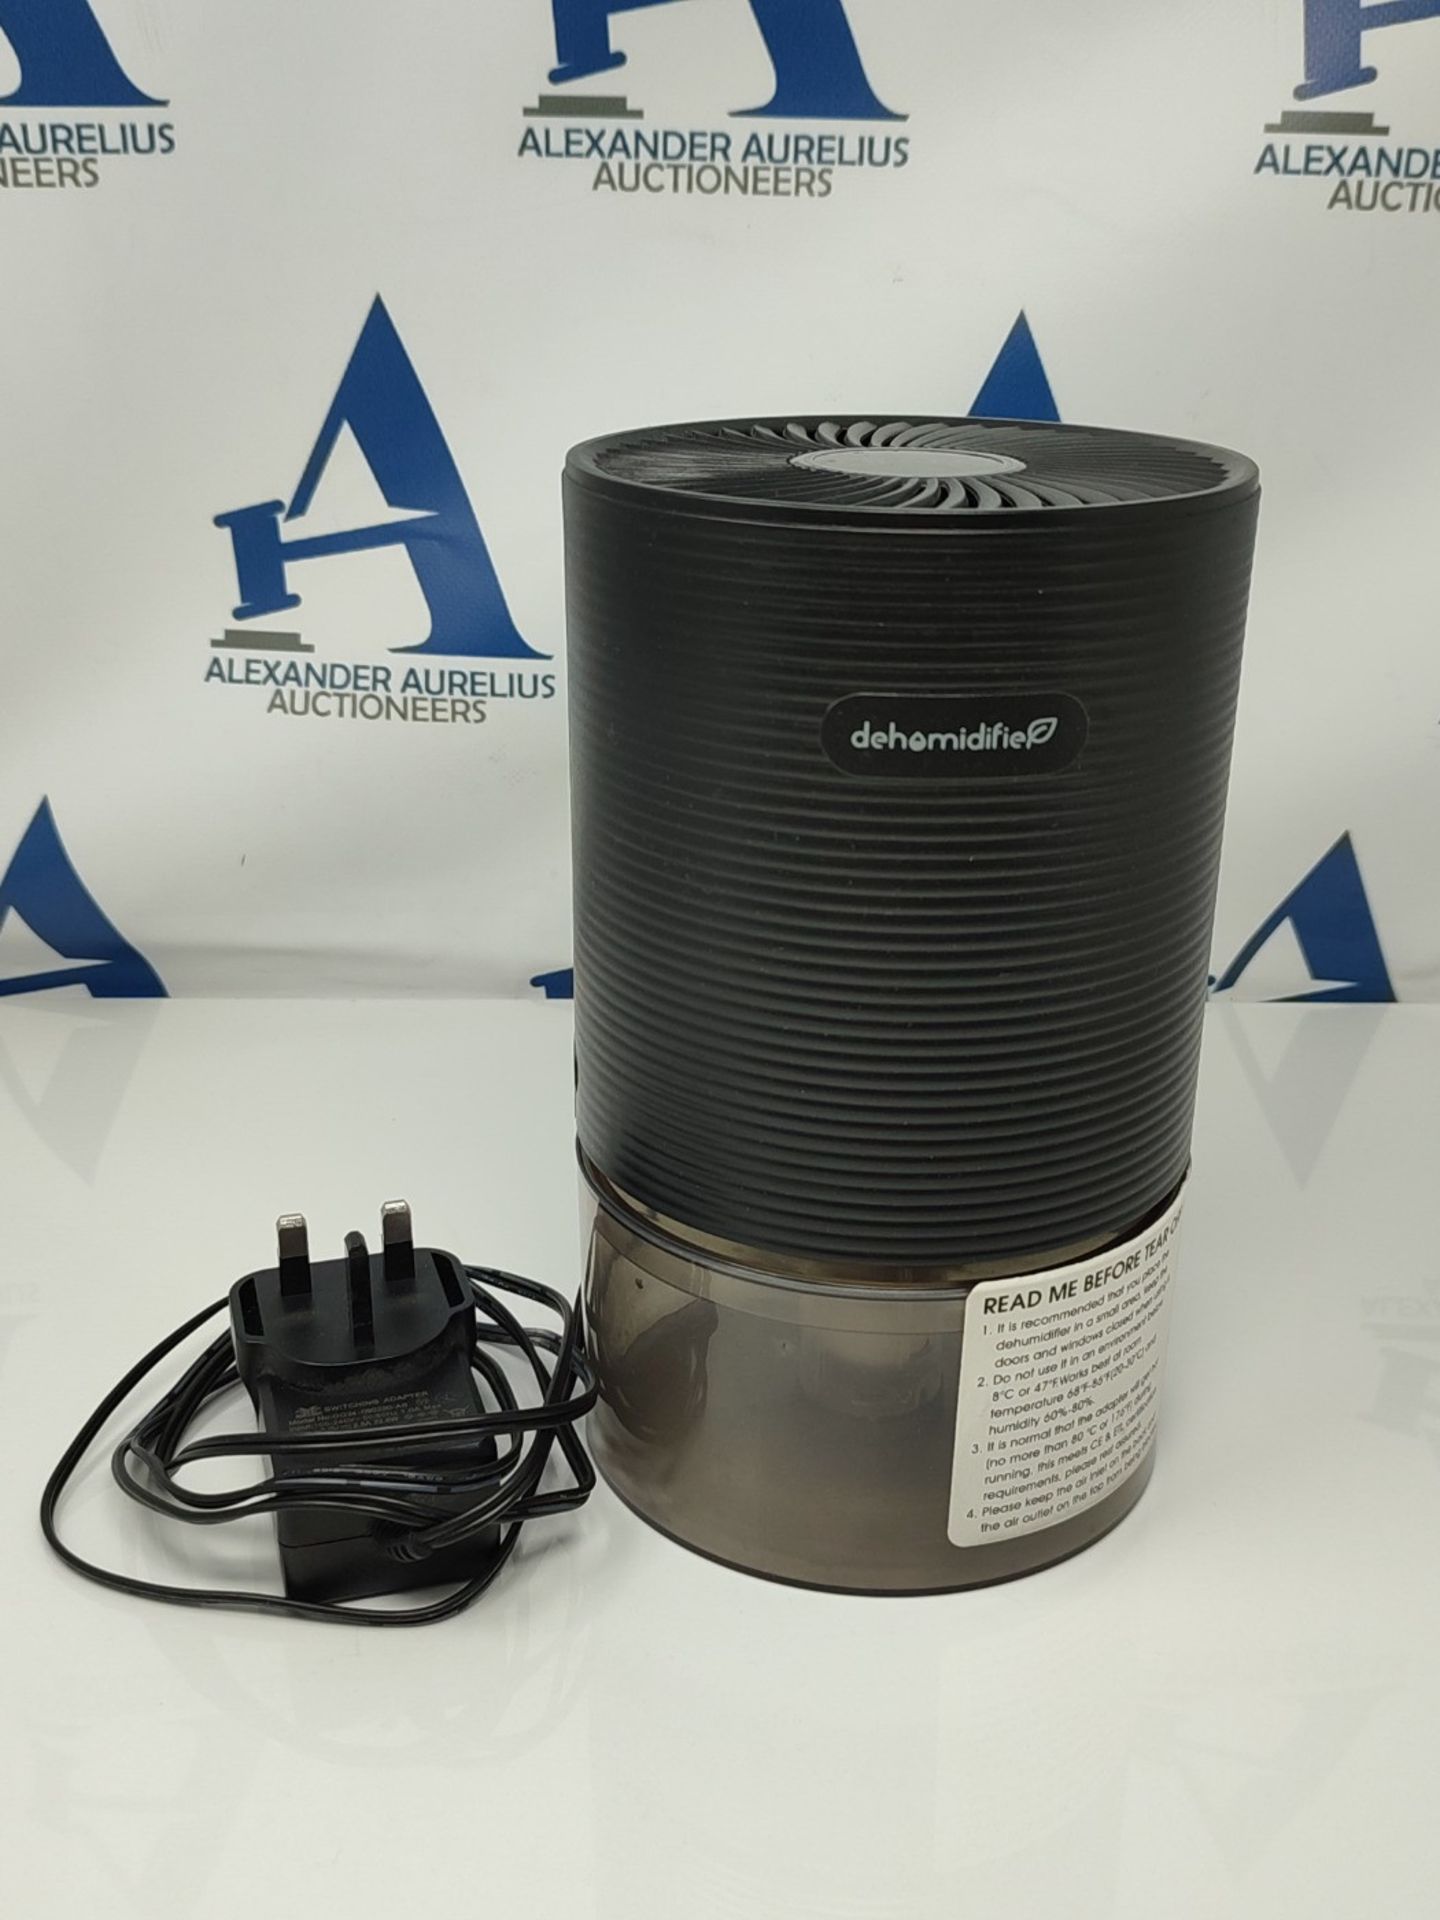 UGHEZZ Dehumidifier Small Dehumidifiers Mini Electric Dehumidifiers, Air Cleaner, Port - Image 2 of 3